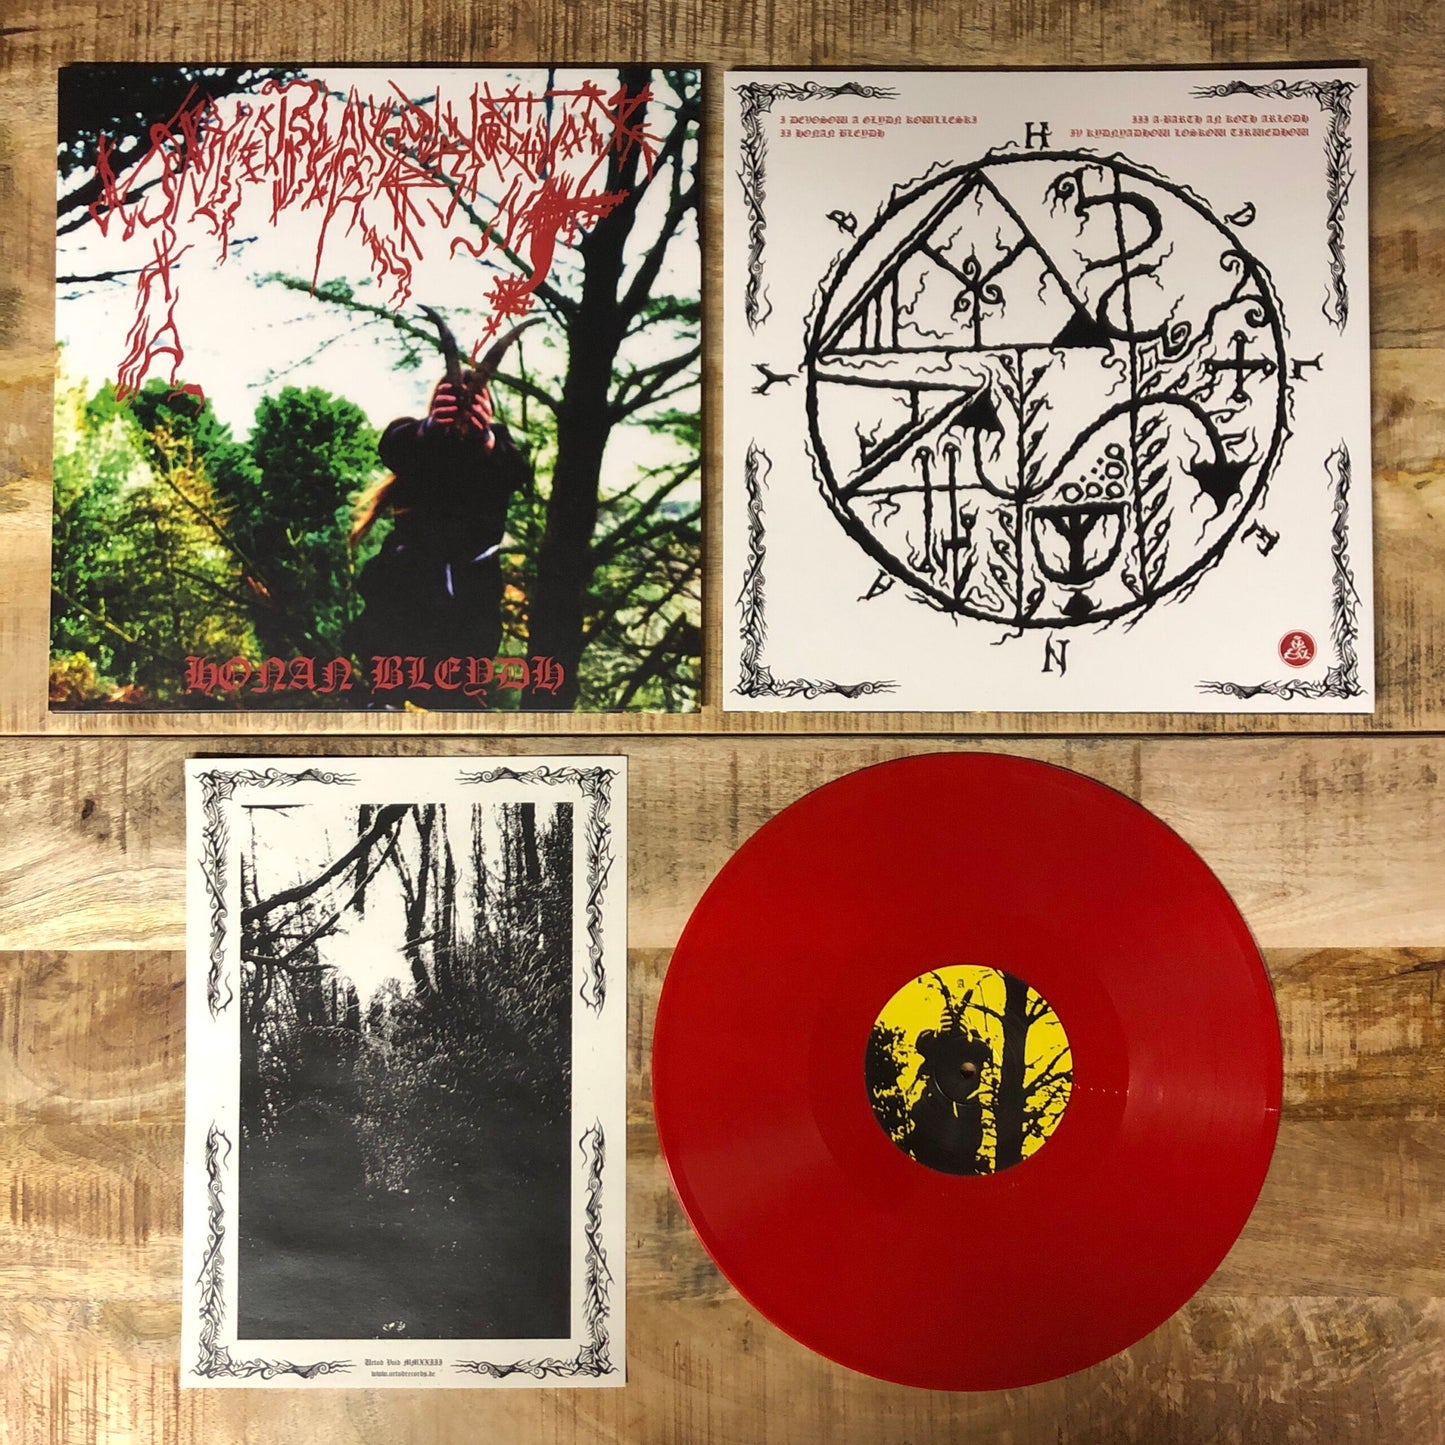 Ynkleudherhenavogyon (UK) "Honan Bleydh" - RED 12" LP *New in Stock*